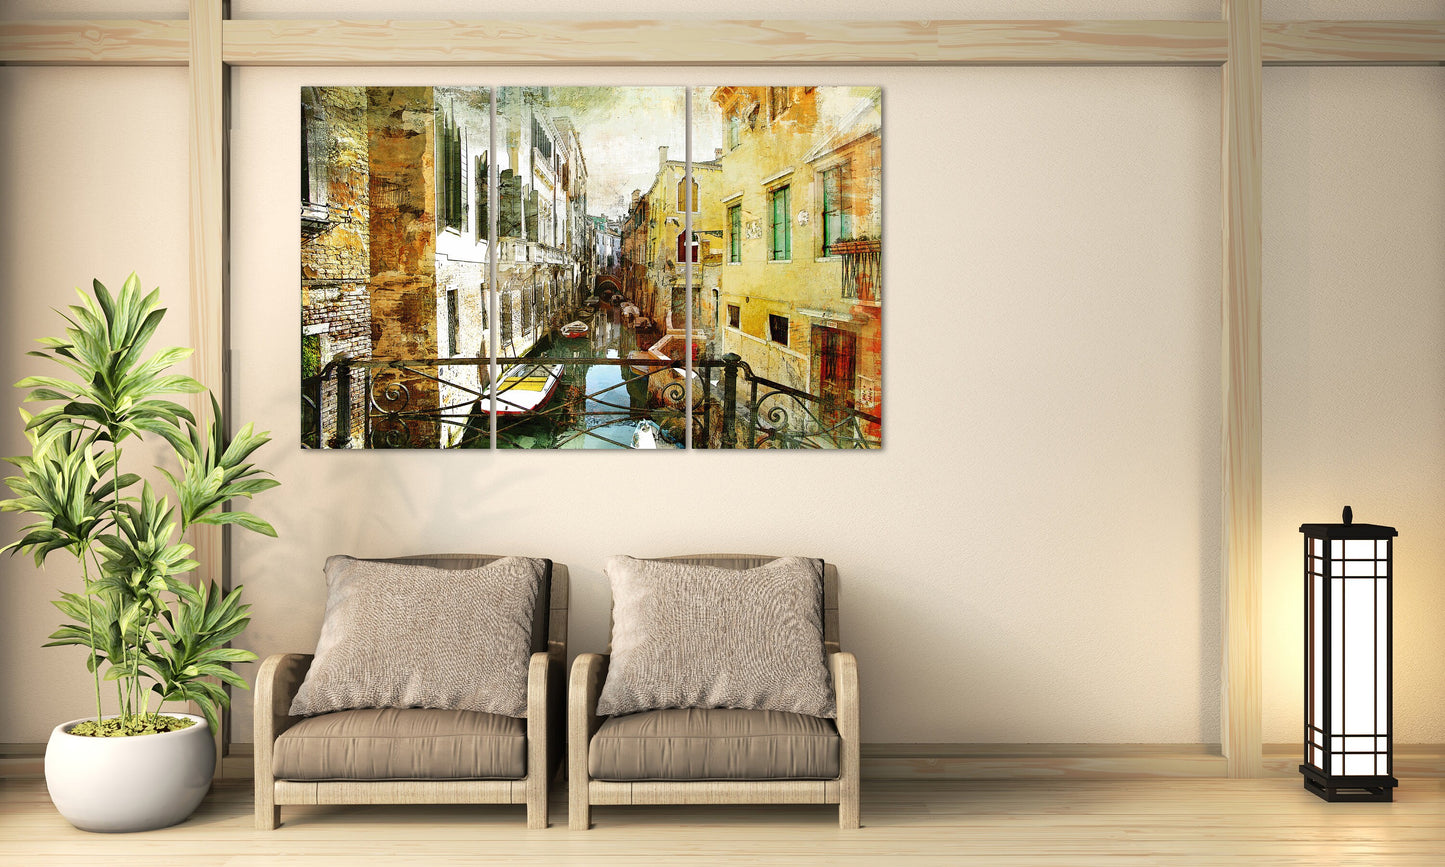 Venetian streets painting, vintage wall art paintings on canvas, city street art canvas print, bathroom wall decor, living room wall art